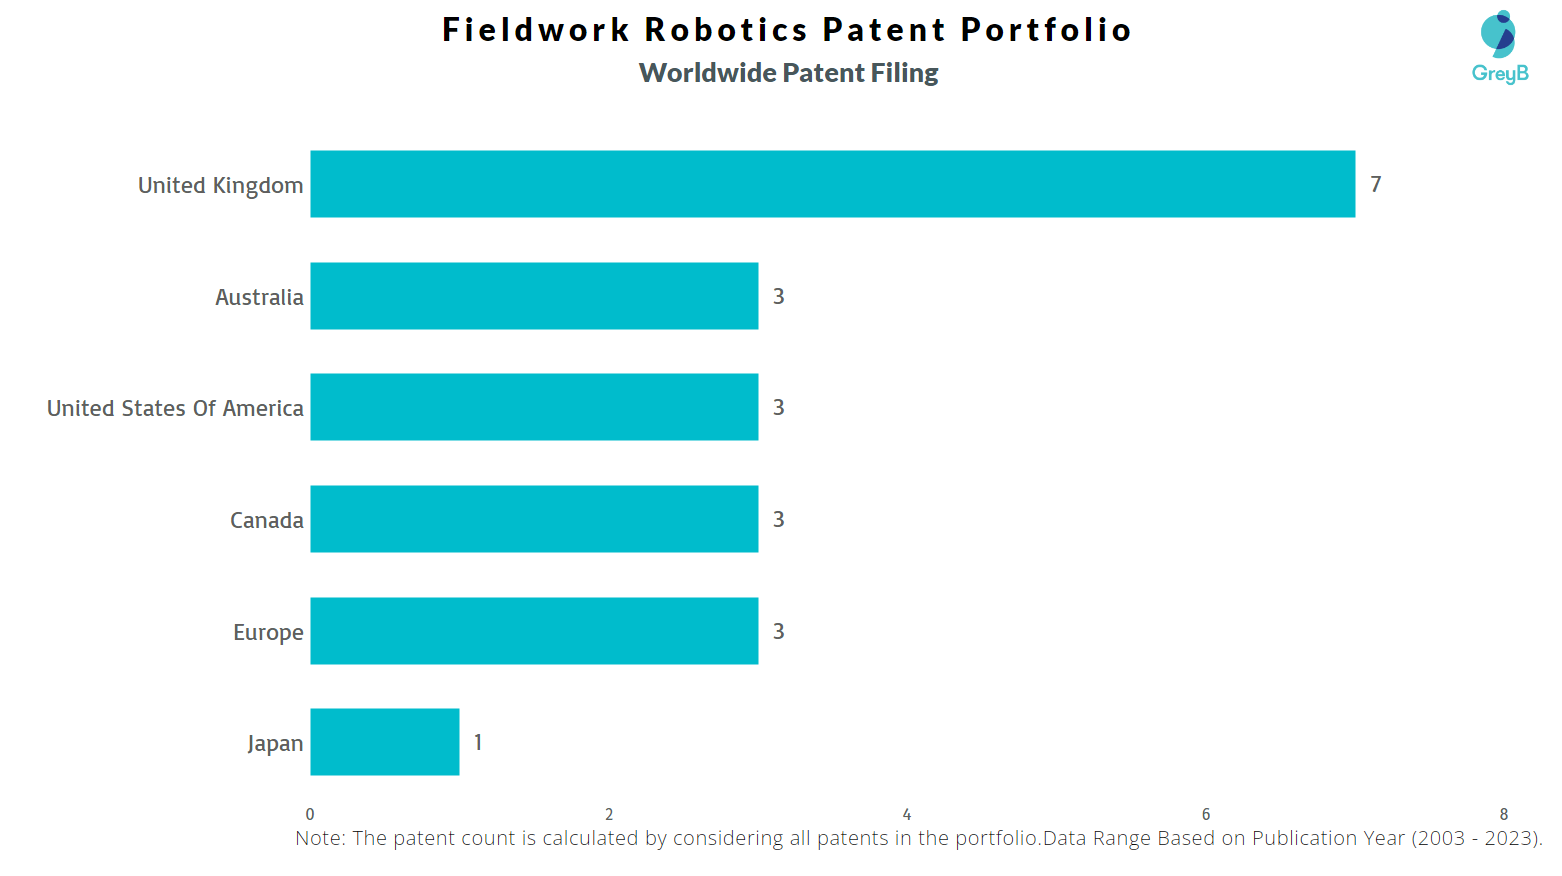 Fieldwork Robotics Worldwide Patent Filing